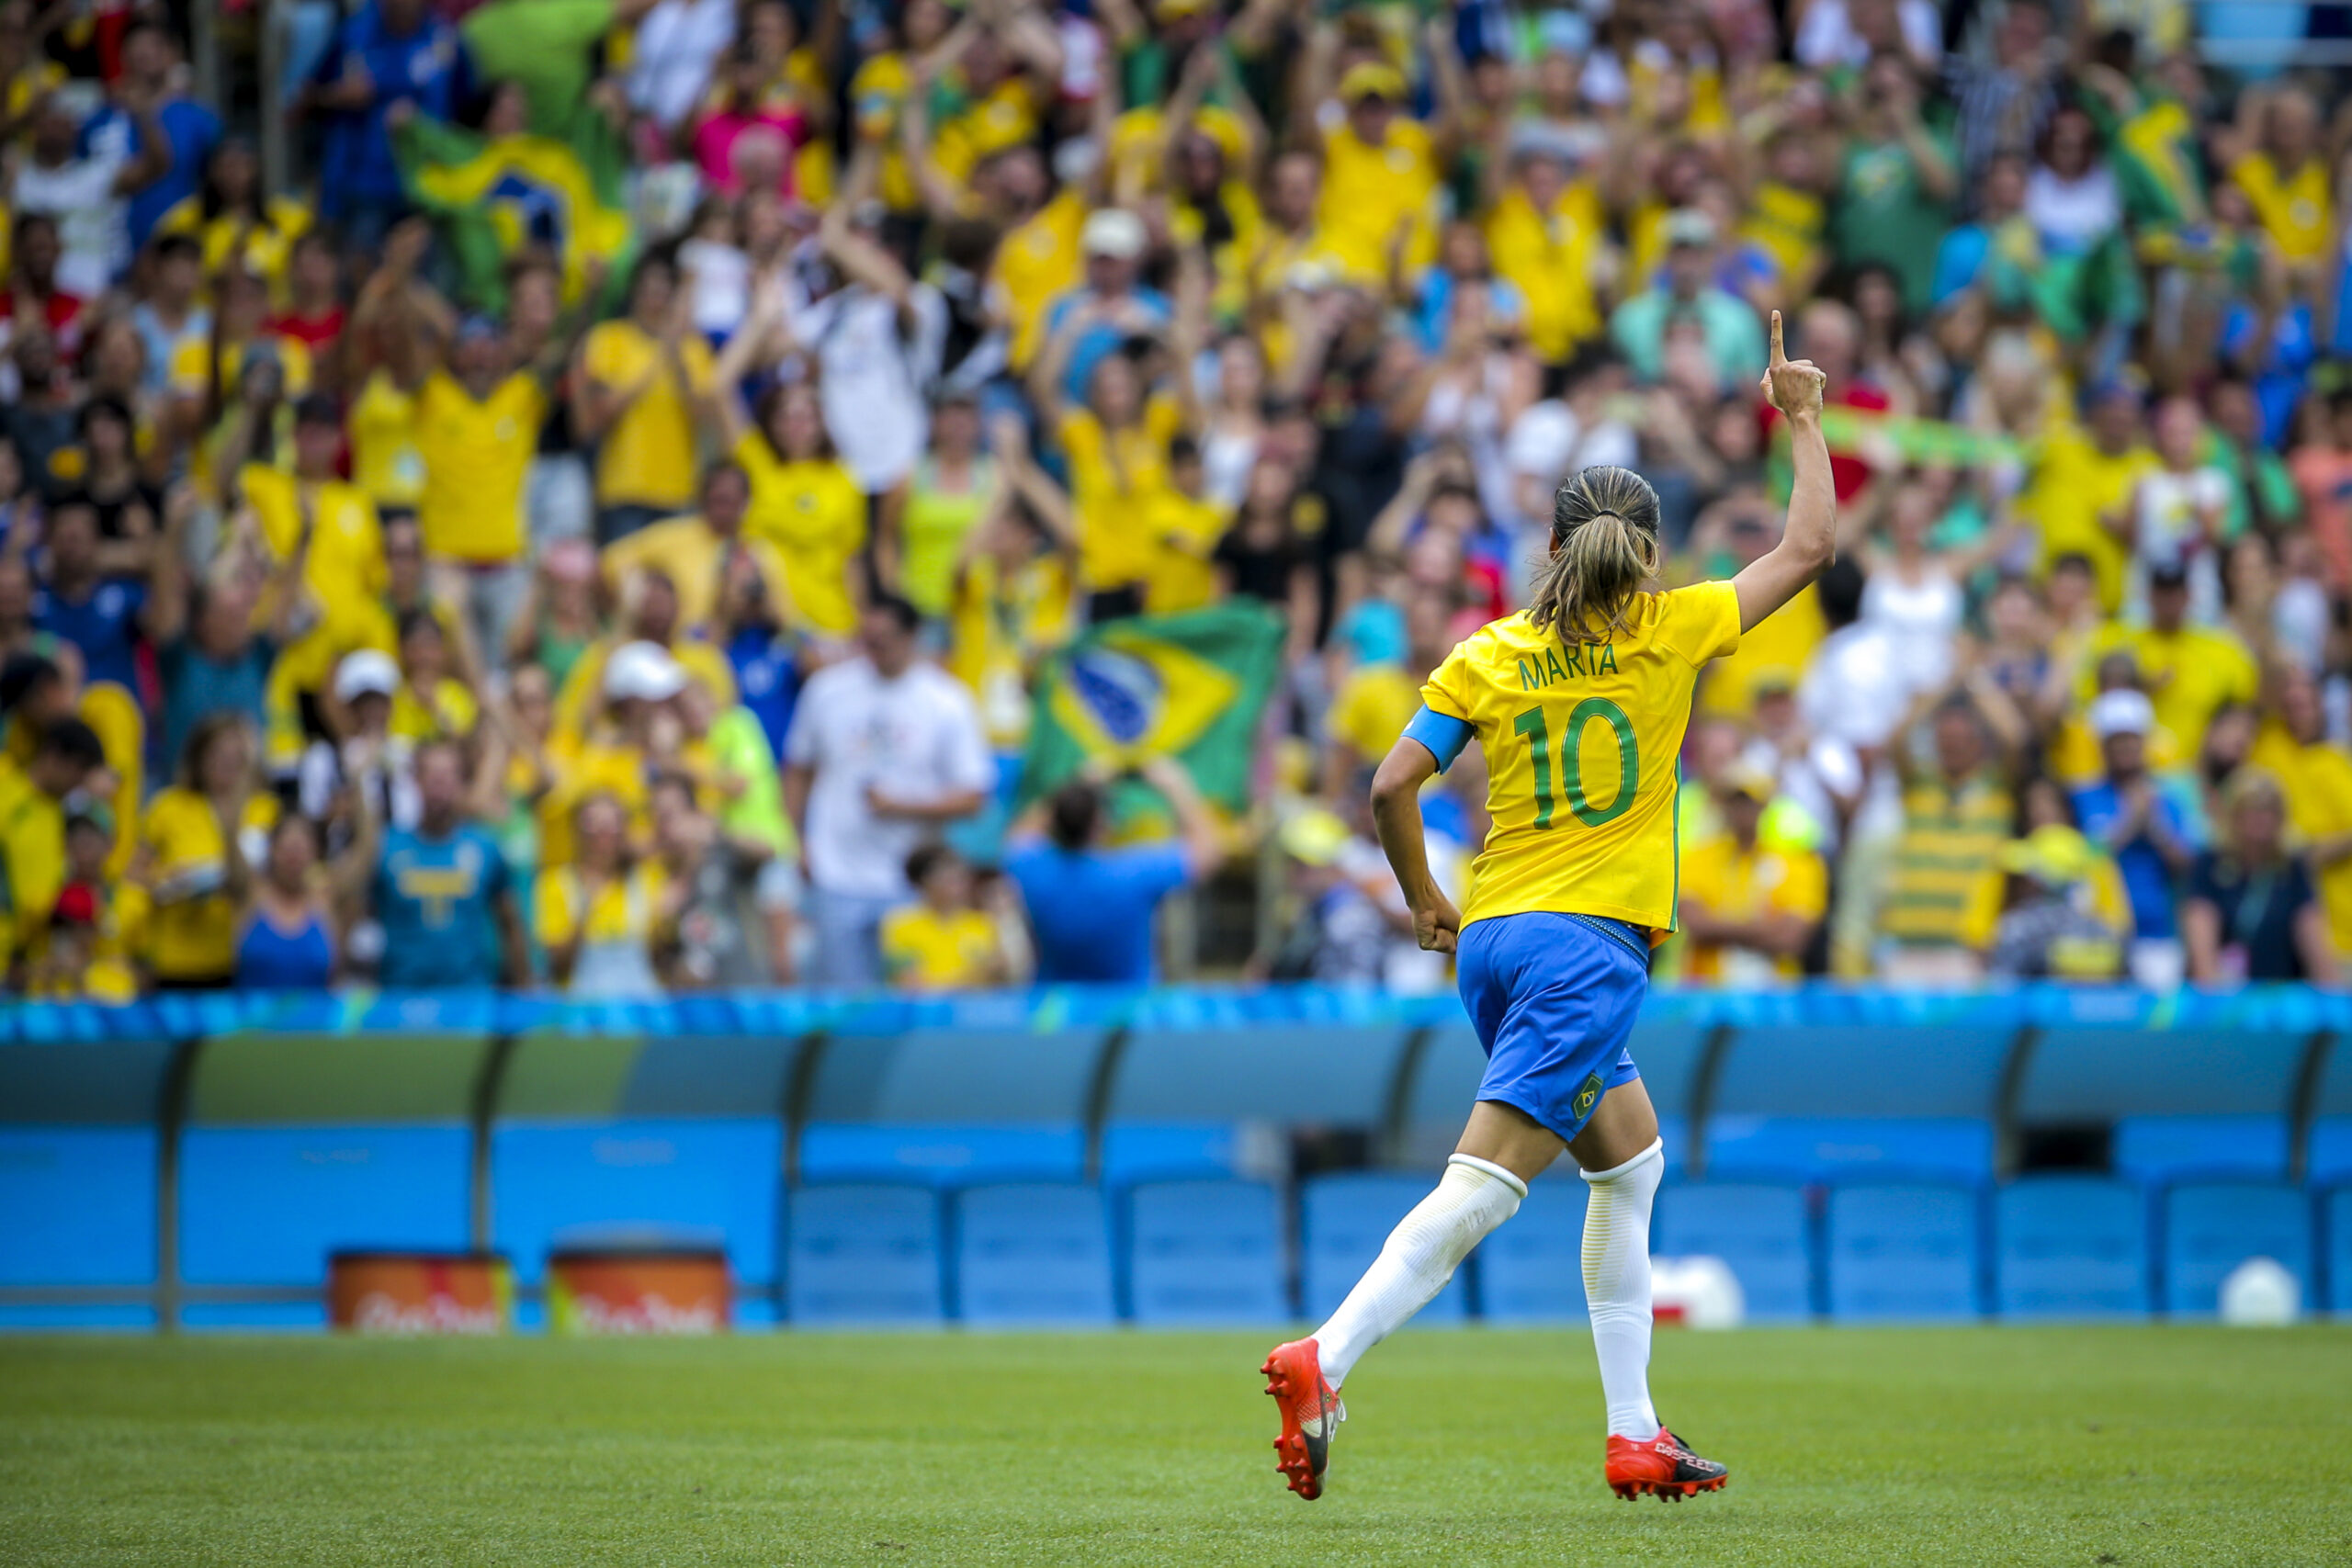 Brasil, o país do futebol americano: soft power